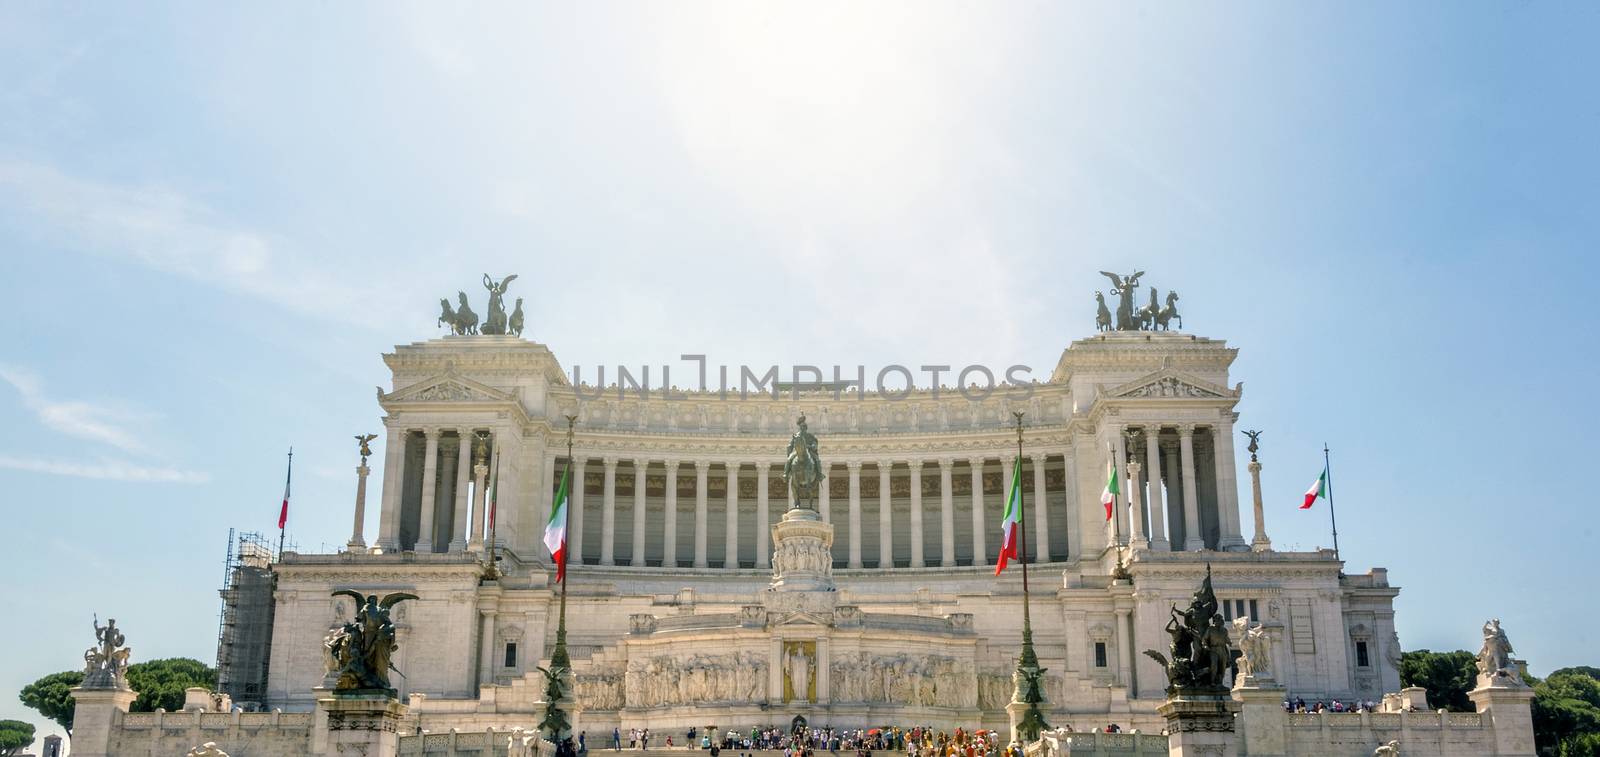 Vittoriano Memorial in Piazza Venezia, Rome, Italy